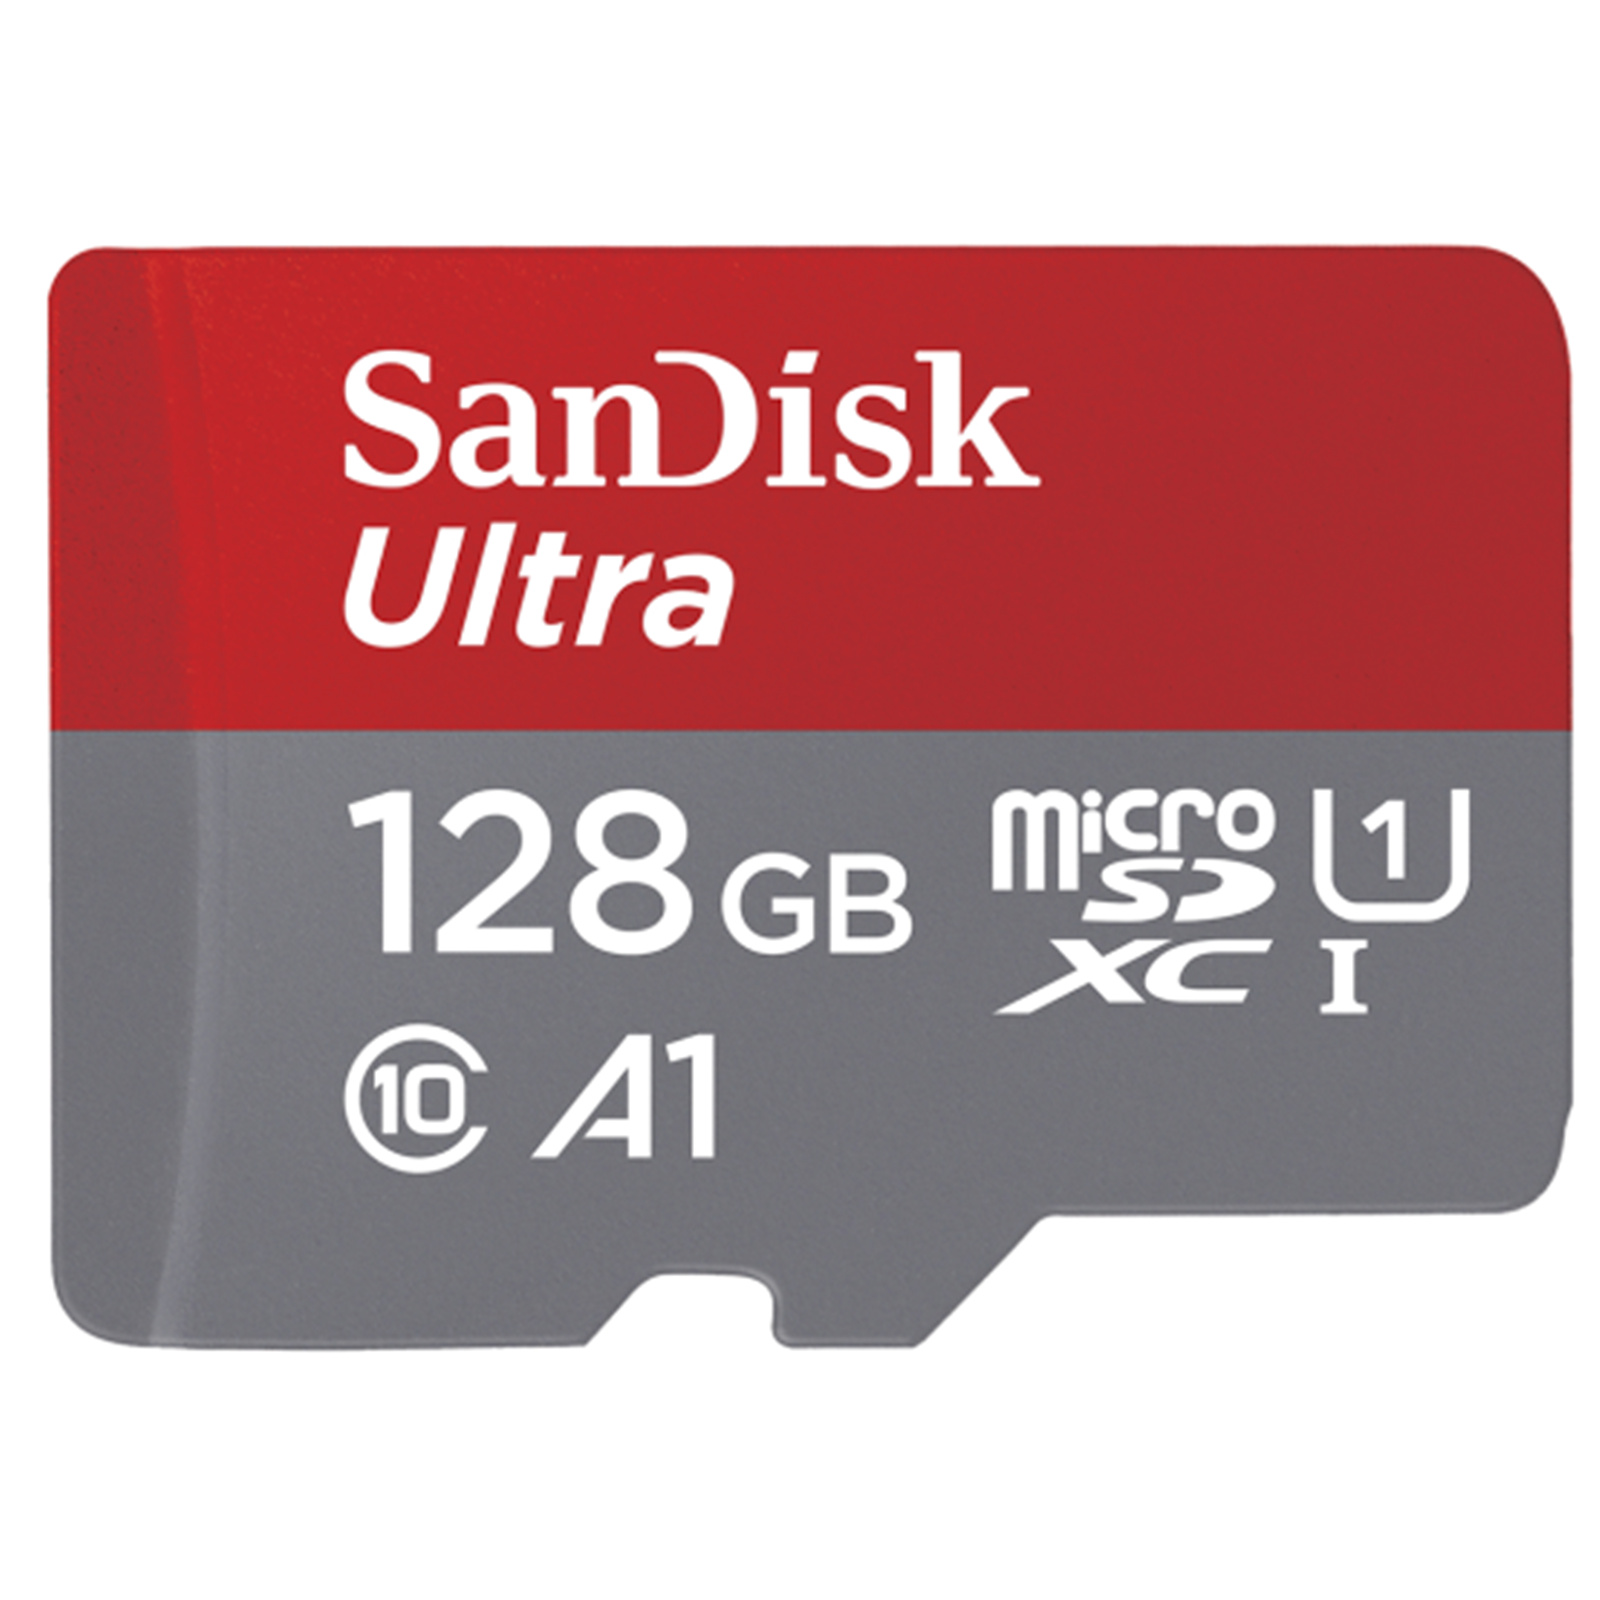 SanDisk Ultra MicroSD Memory Card - 128GB